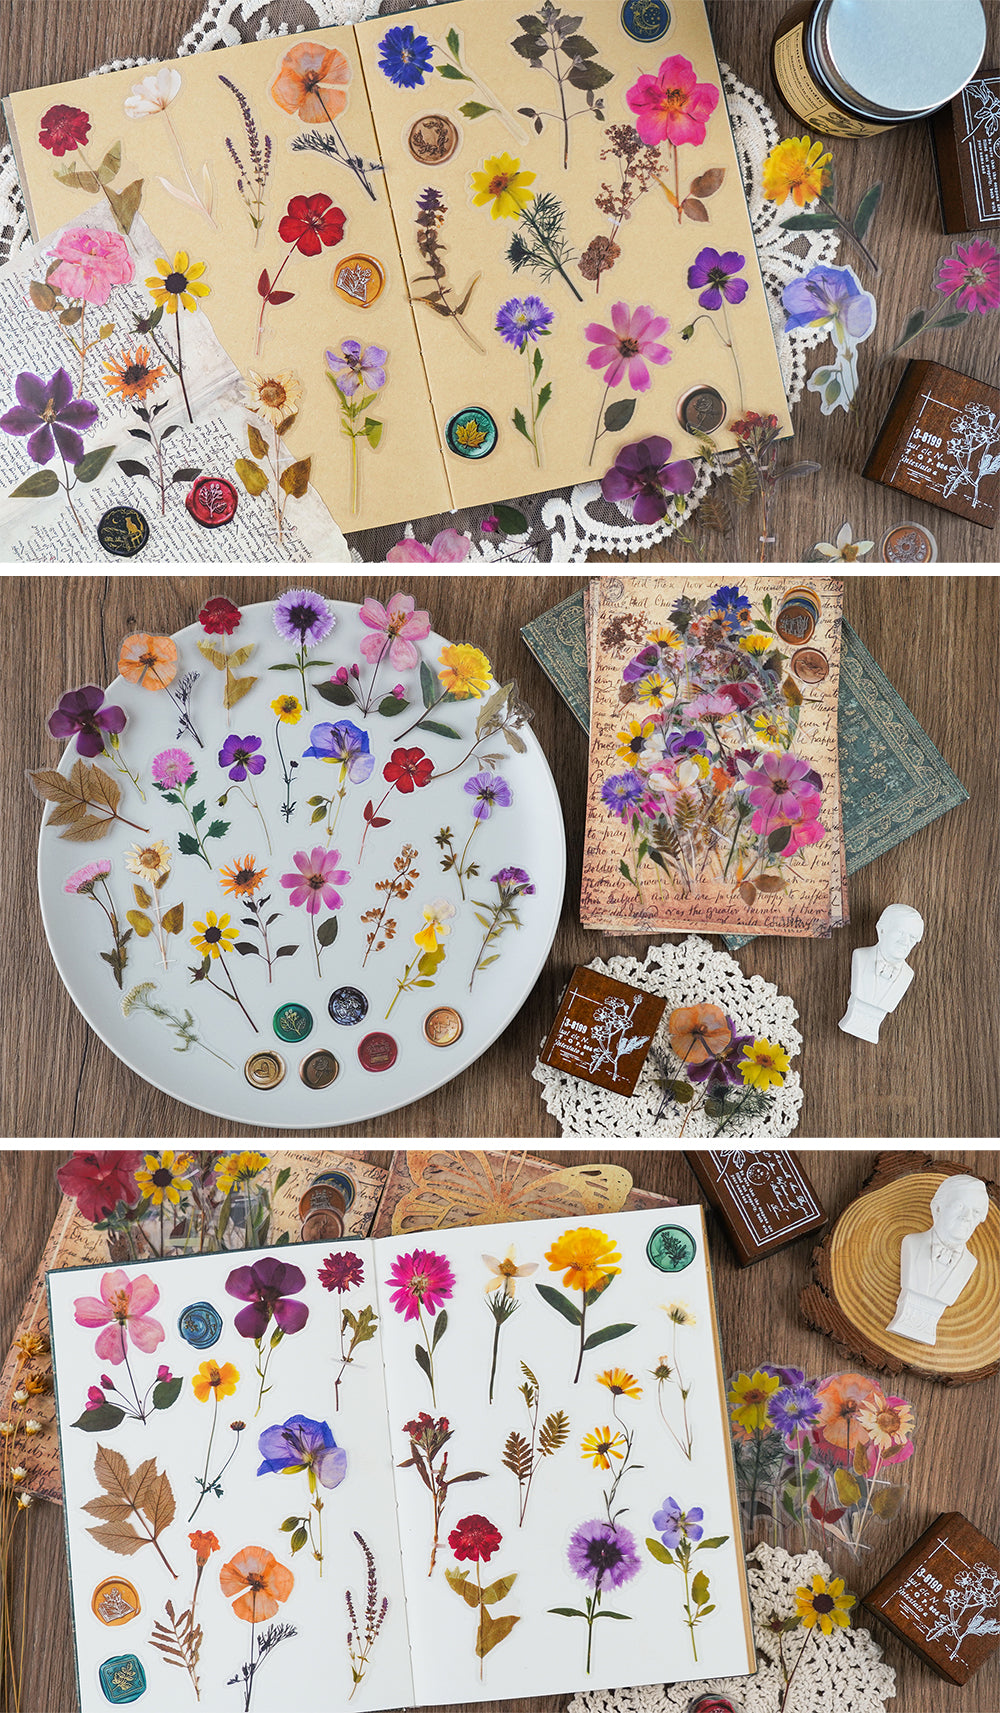 Knaid Flower Stickers Set (360 Pieces) Decorative Assorted Floral Sticker  for Scrapbooking Planner Bullet Journals Supplies